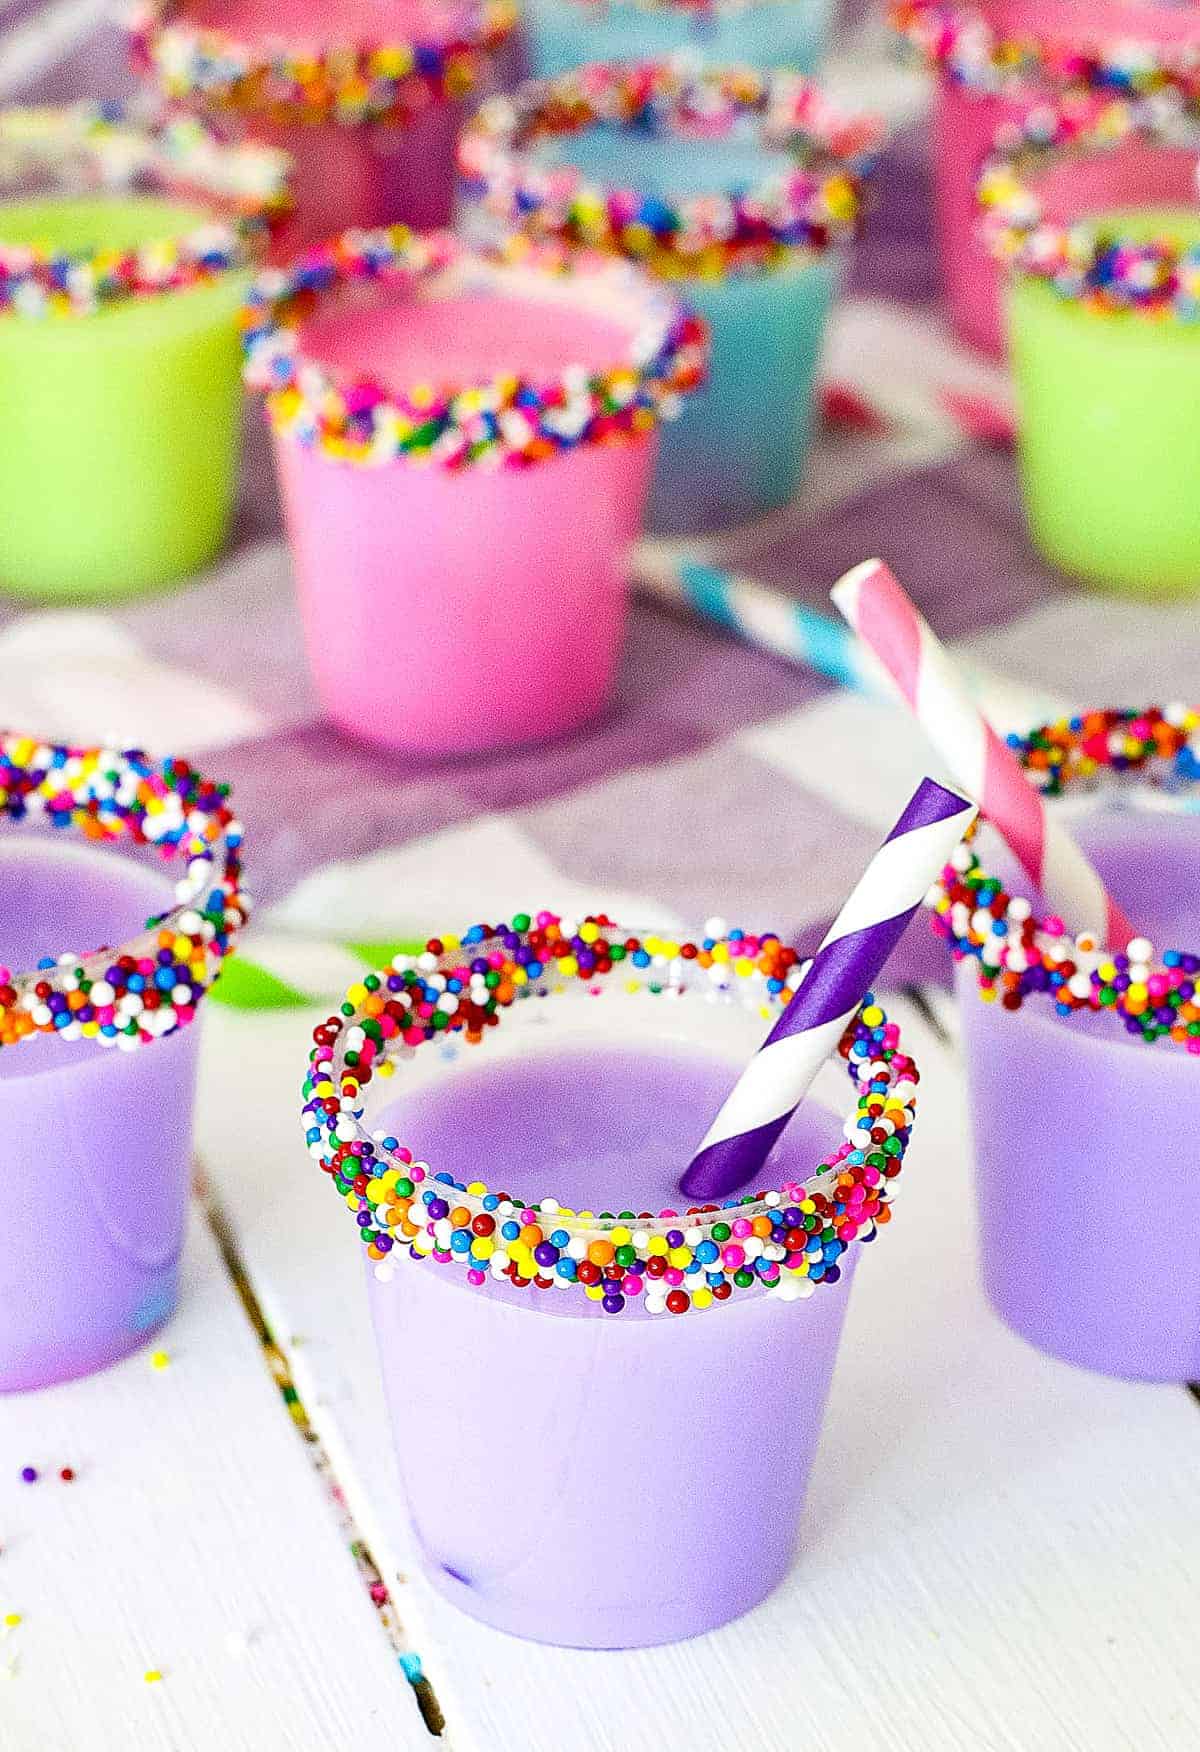 Birthday Cake Shots with mini straws in them